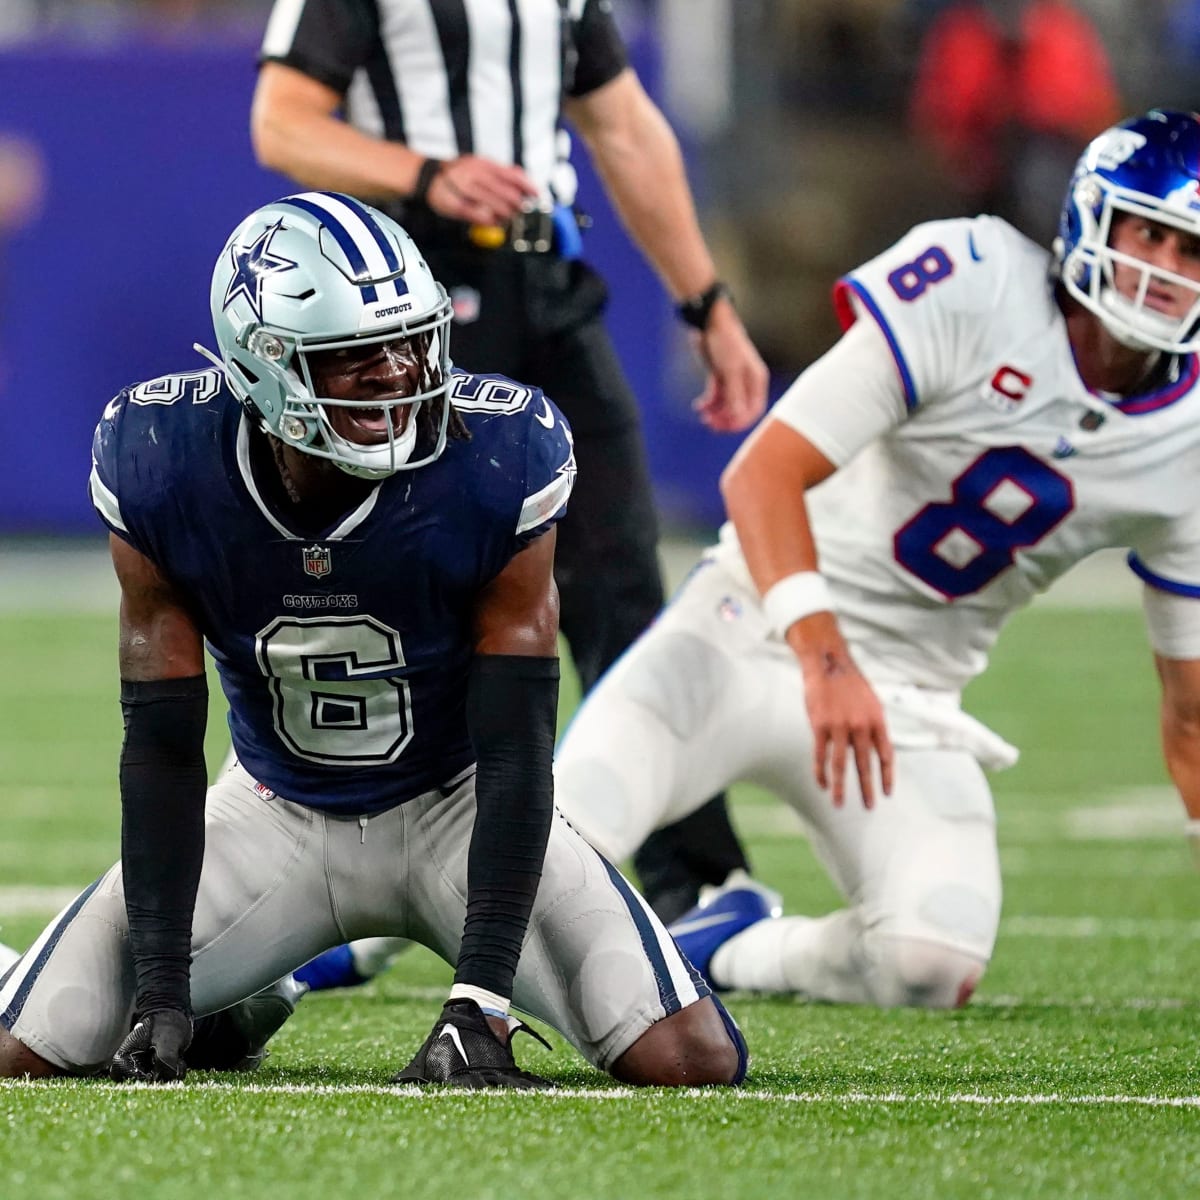 Giants vs Cowboys Odds, Line, Spread & Prediction - NFL Week 1